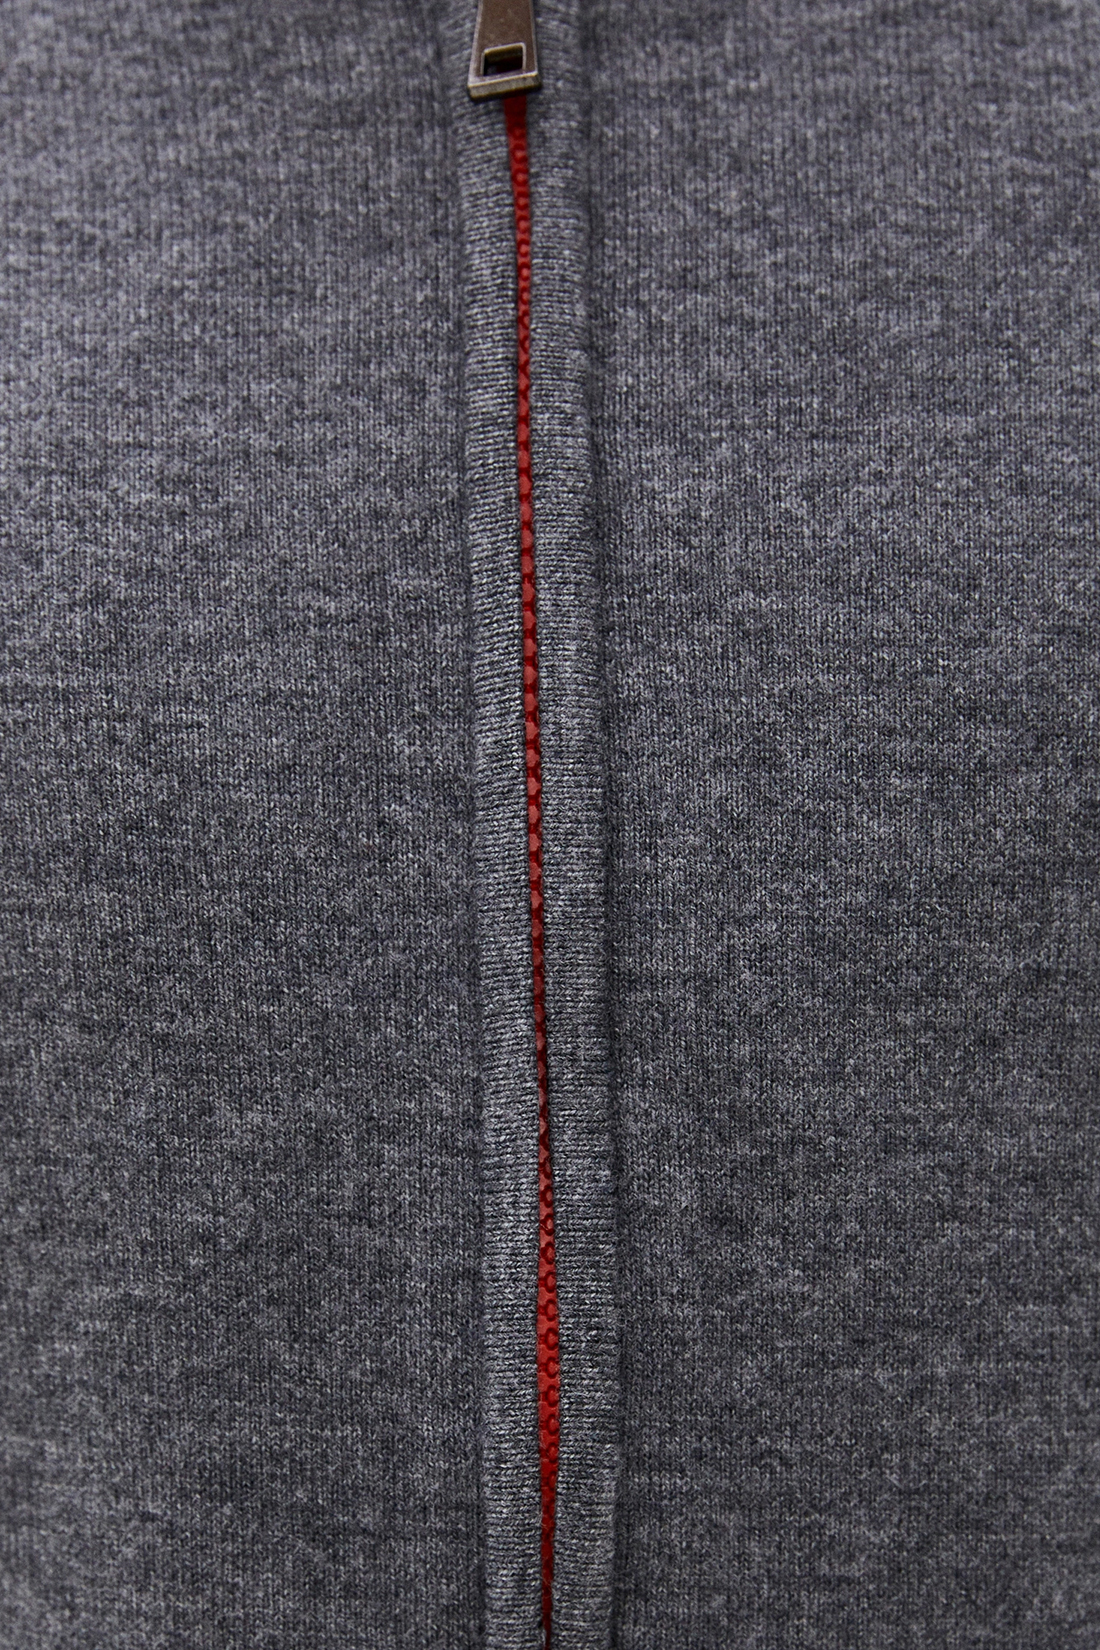 Кардиган (арт. baon B640502), размер 3XL, цвет marengo melange#серый Кардиган (арт. baon B640502) - фото 3